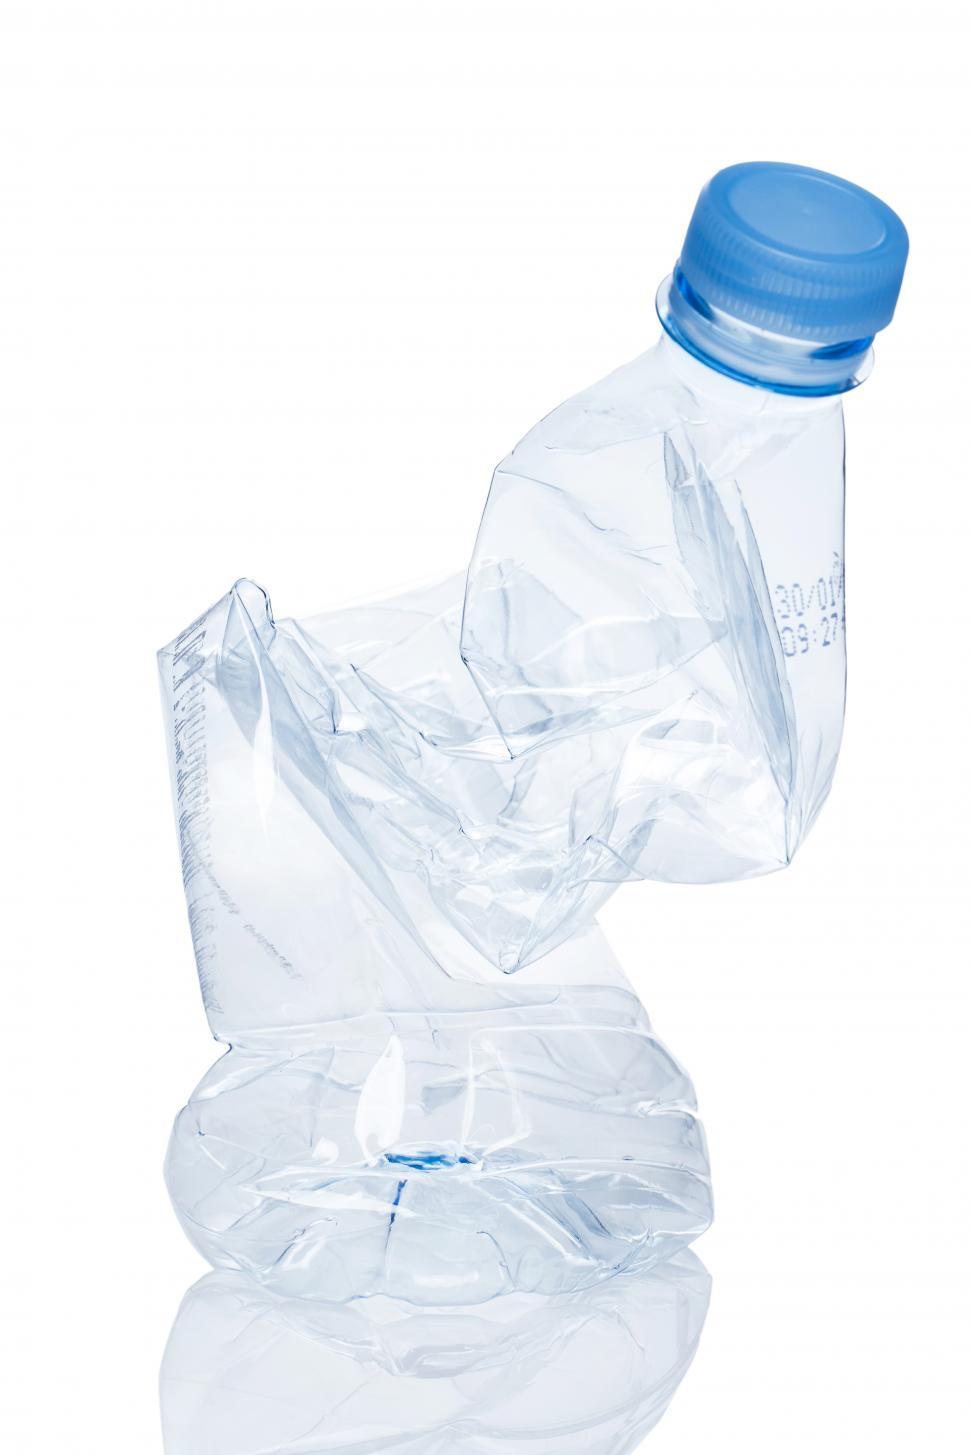 Free Stock Photo of Utilization. One empty plastic water bottle